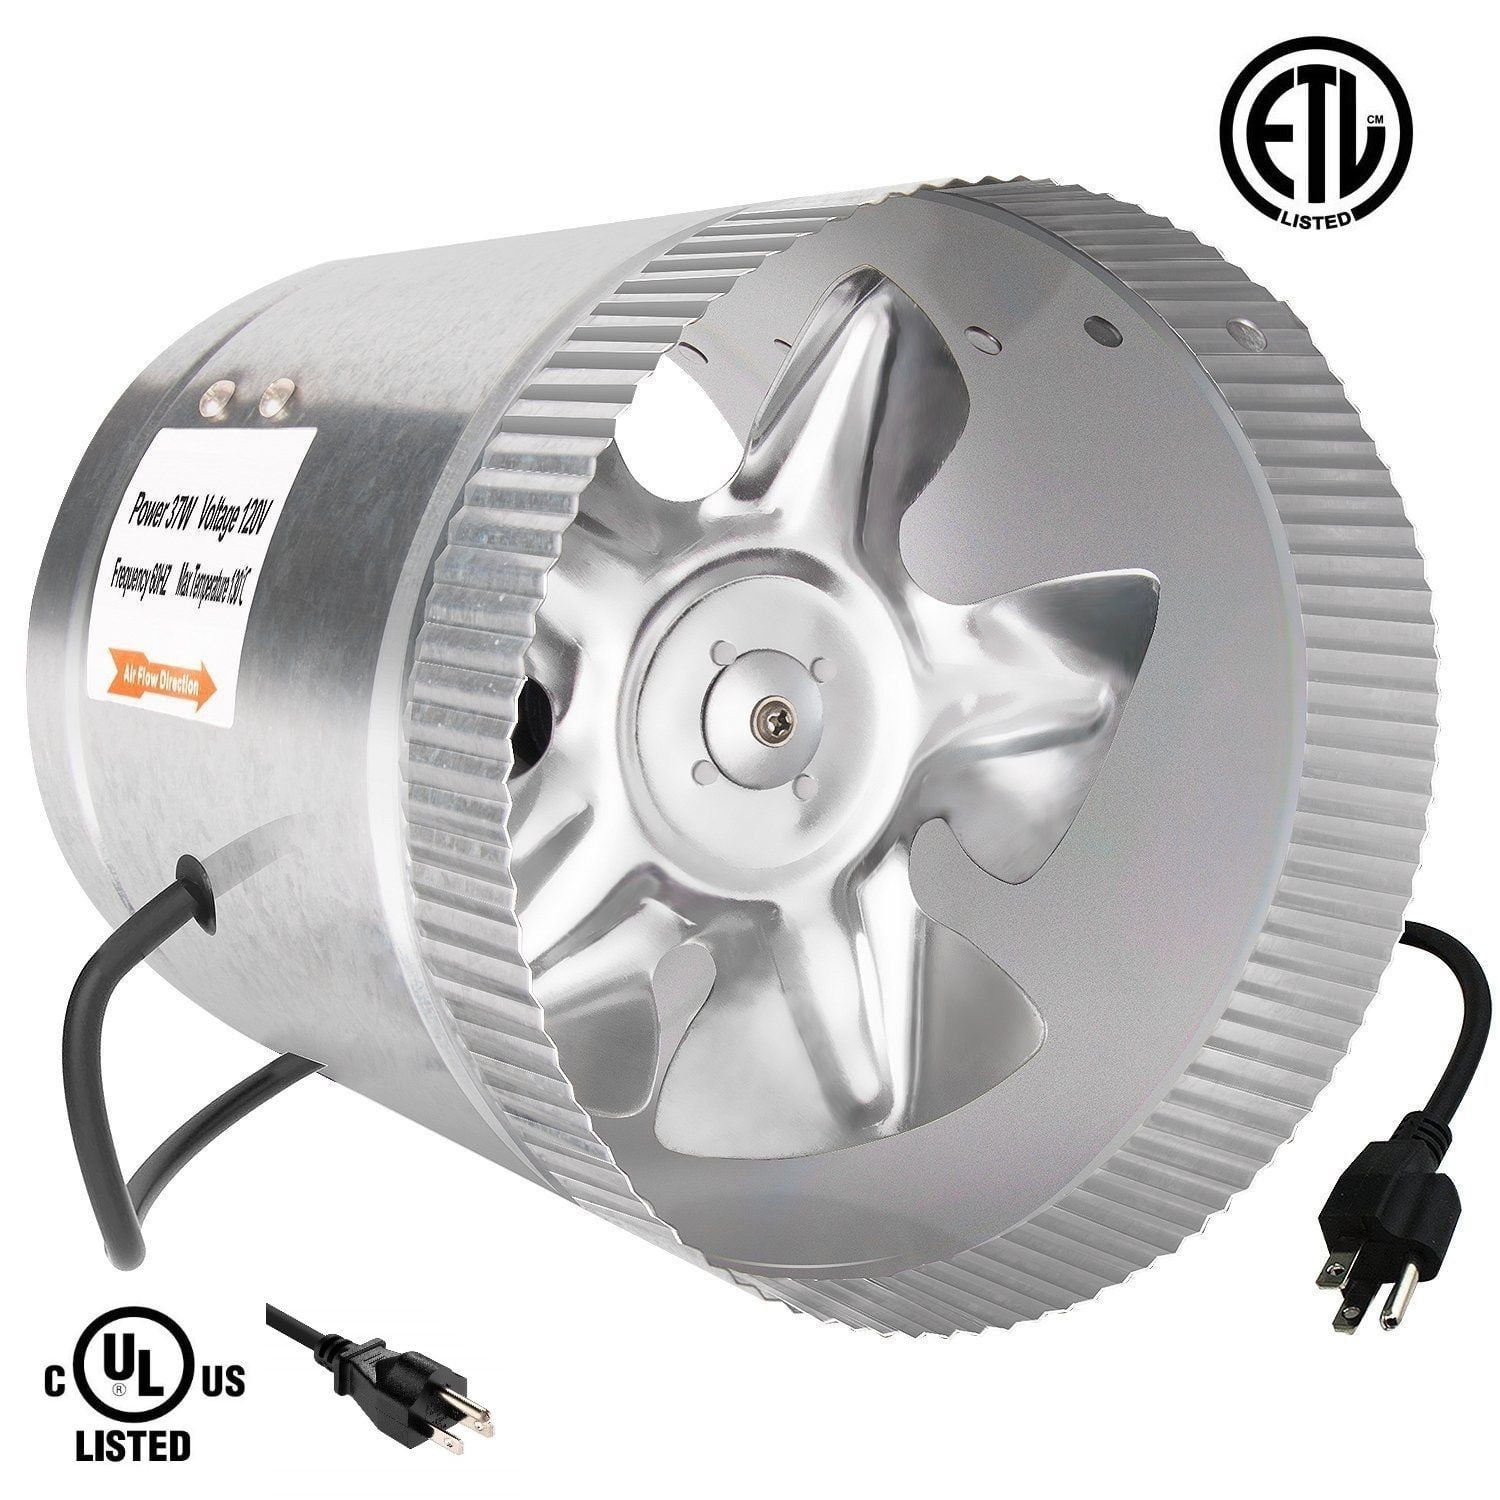 6" Strong CFM Ventilation Inline Fan Hydroponics Exhaust Cooling Duct Fan 